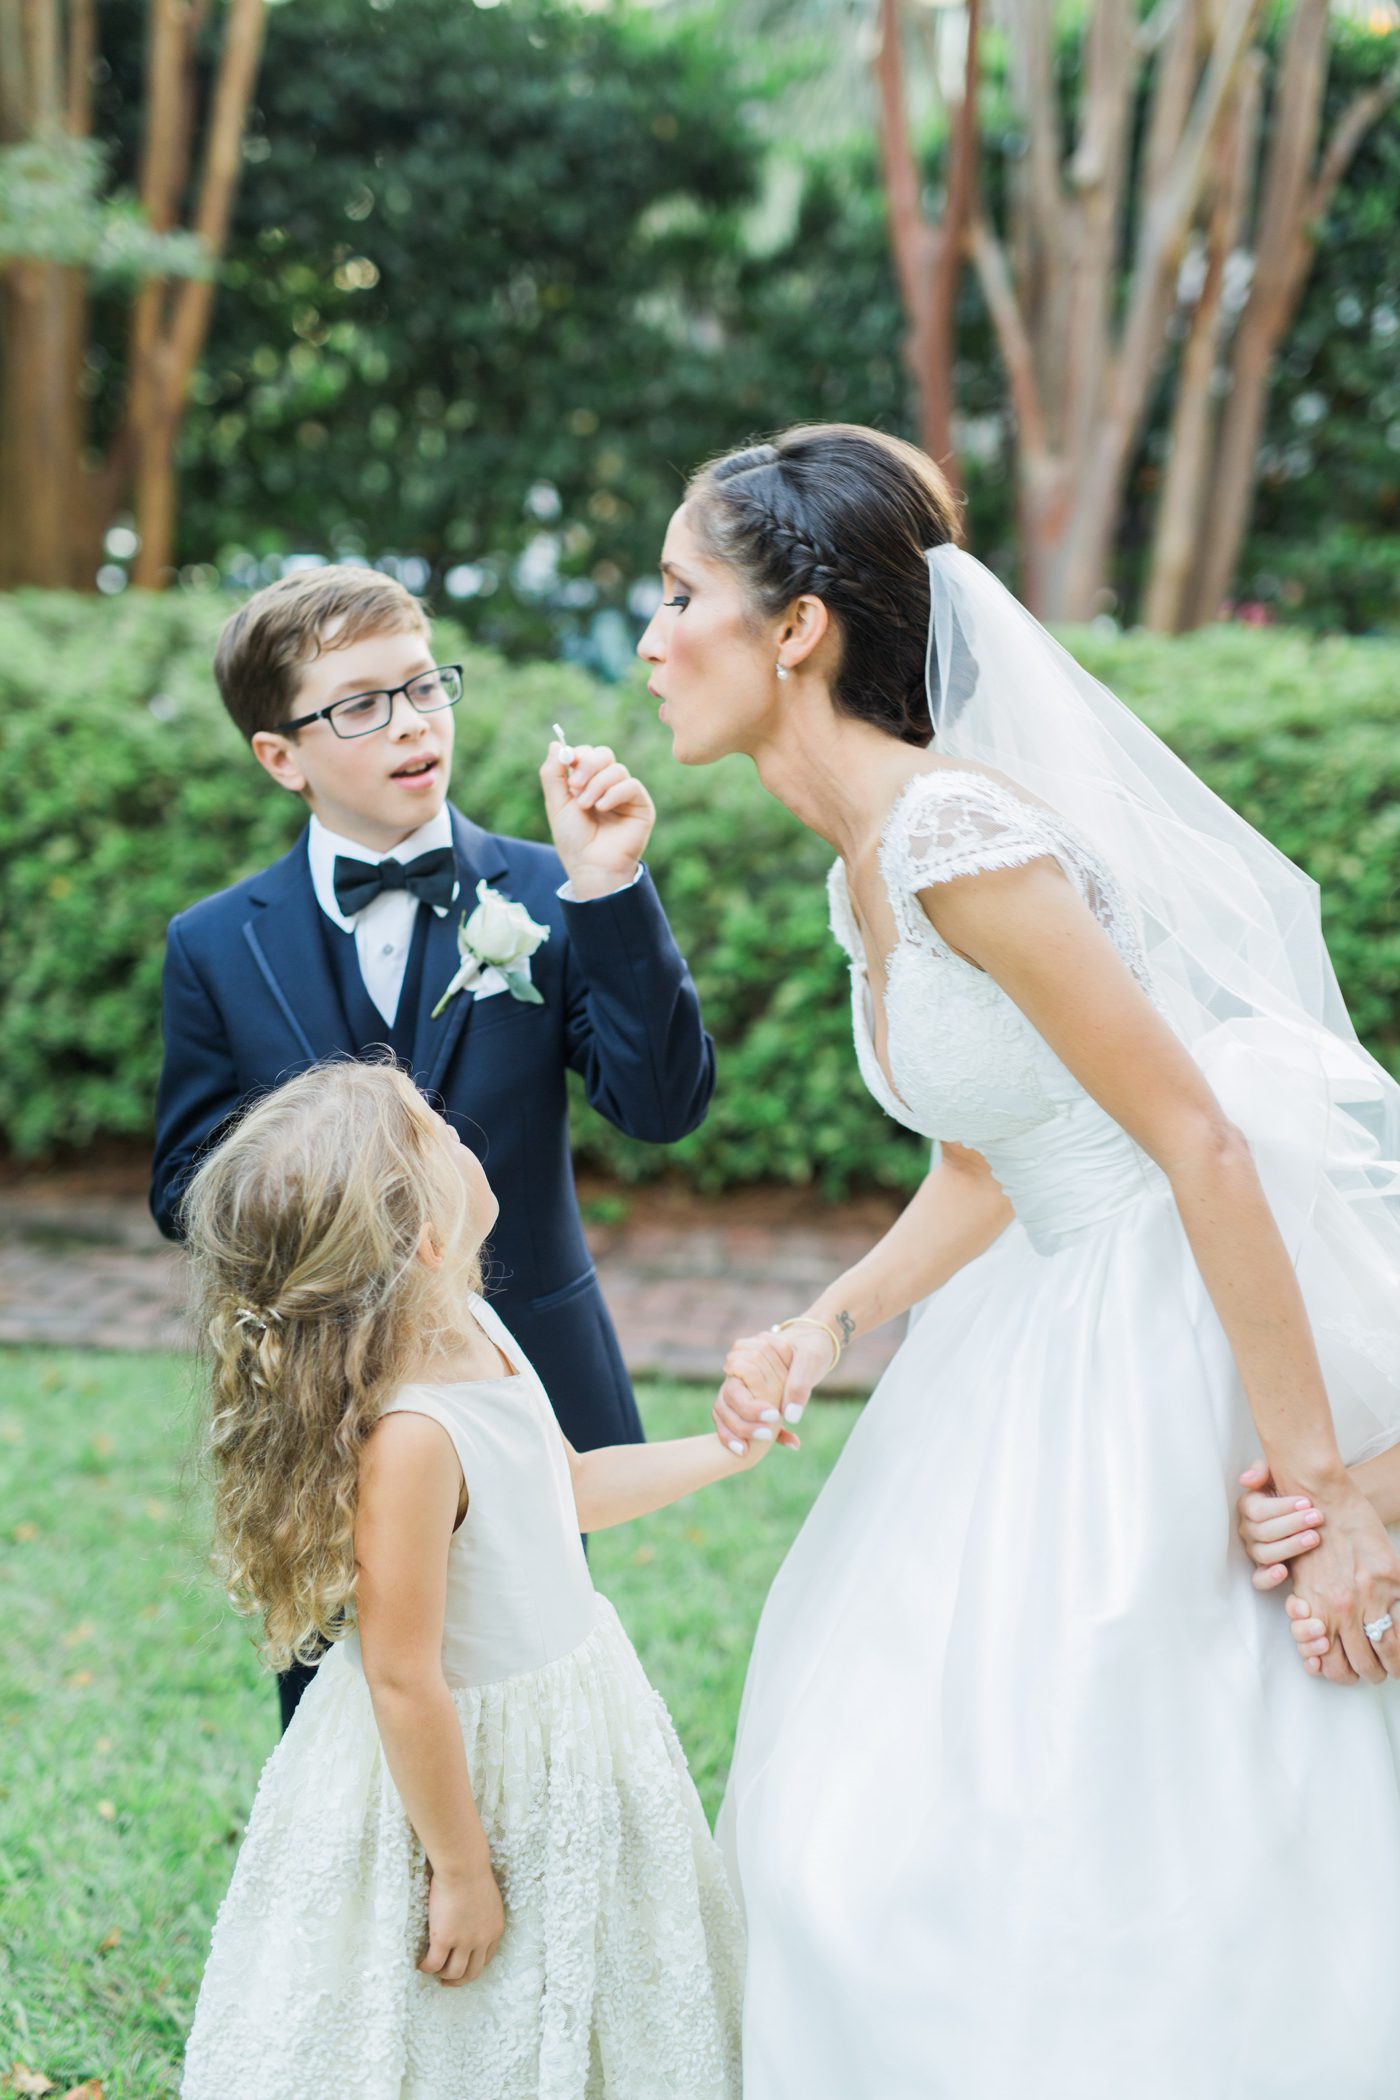 Fun wedding picture bride blowing bubbles | Elegant William Aiken House Wedding Photos | Charleston SC wedding photographers Catherine Ann Photography